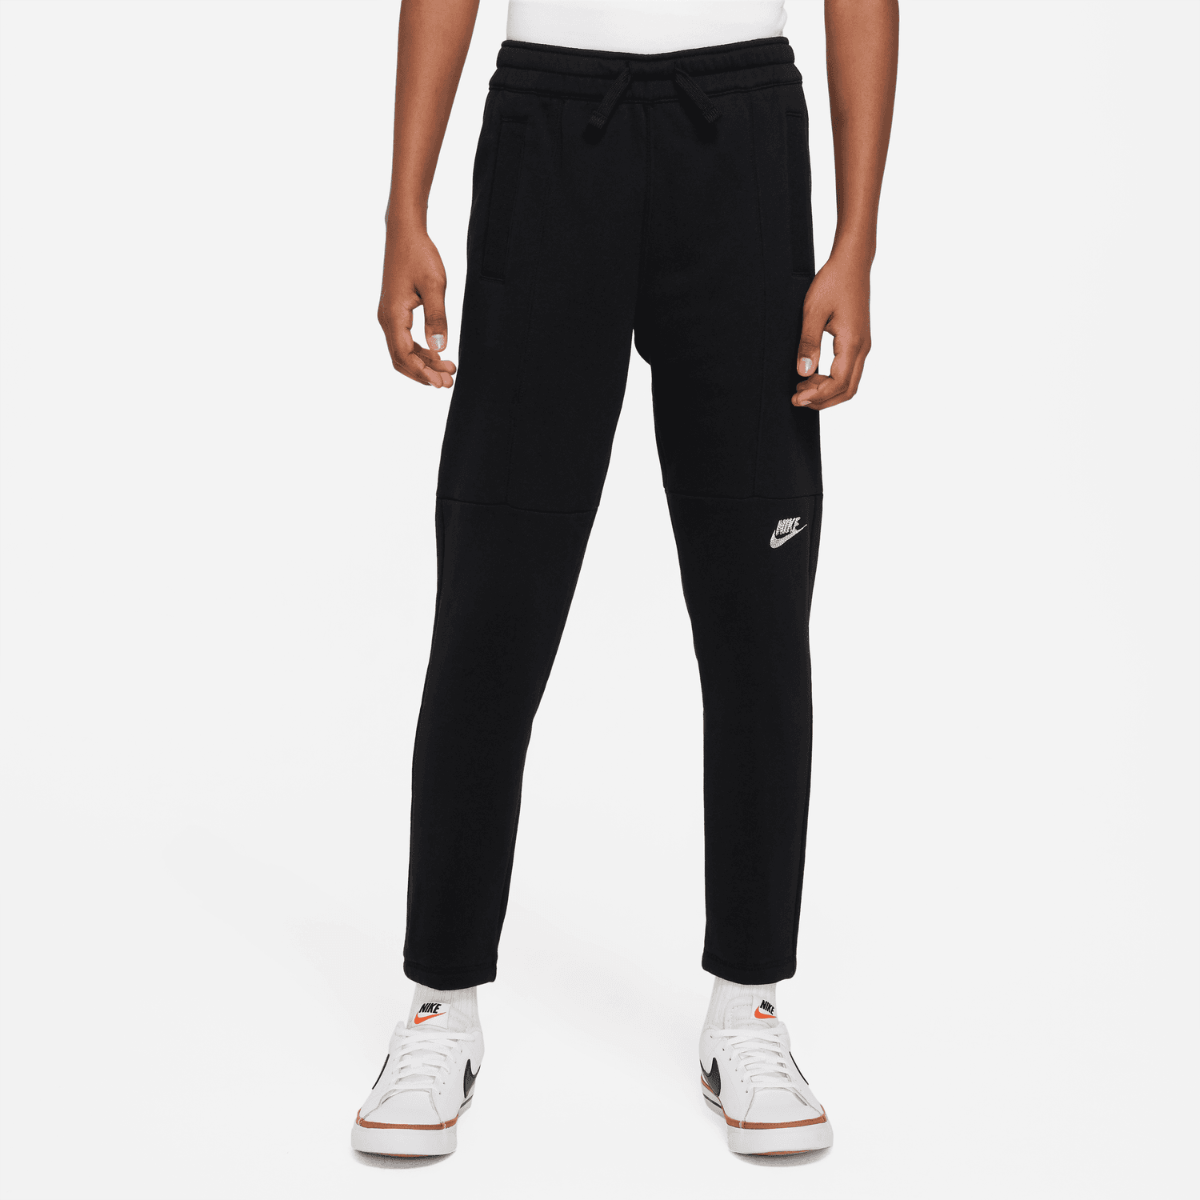 Pantaloni Nike Sportswear Amplify Junior - Nero/Bianco